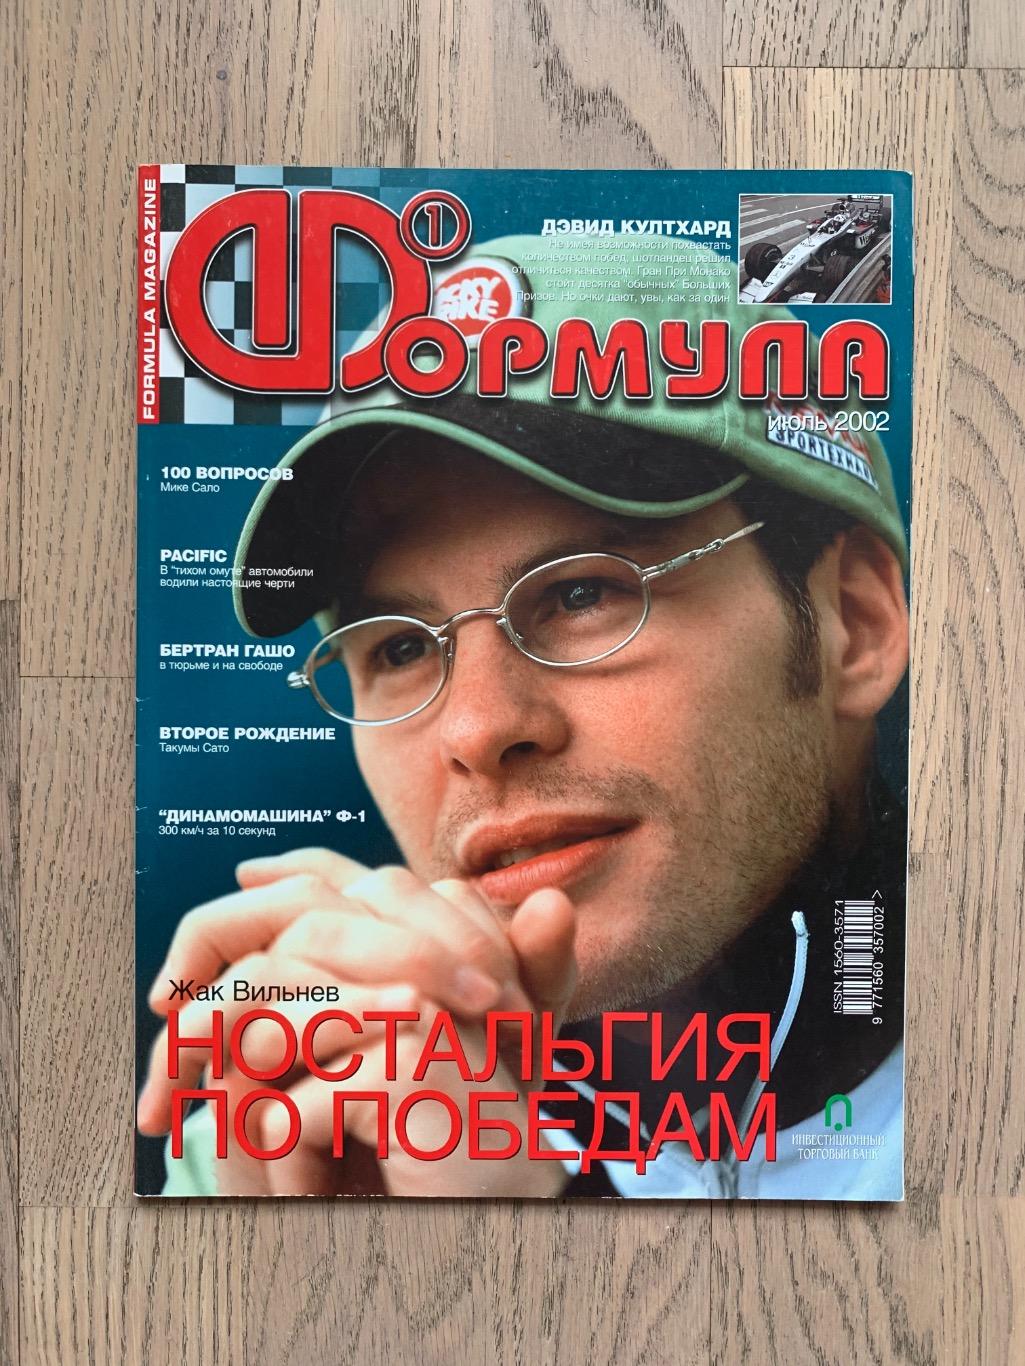 Журнал Формула 1 (Formula Magazine) / июль 2002